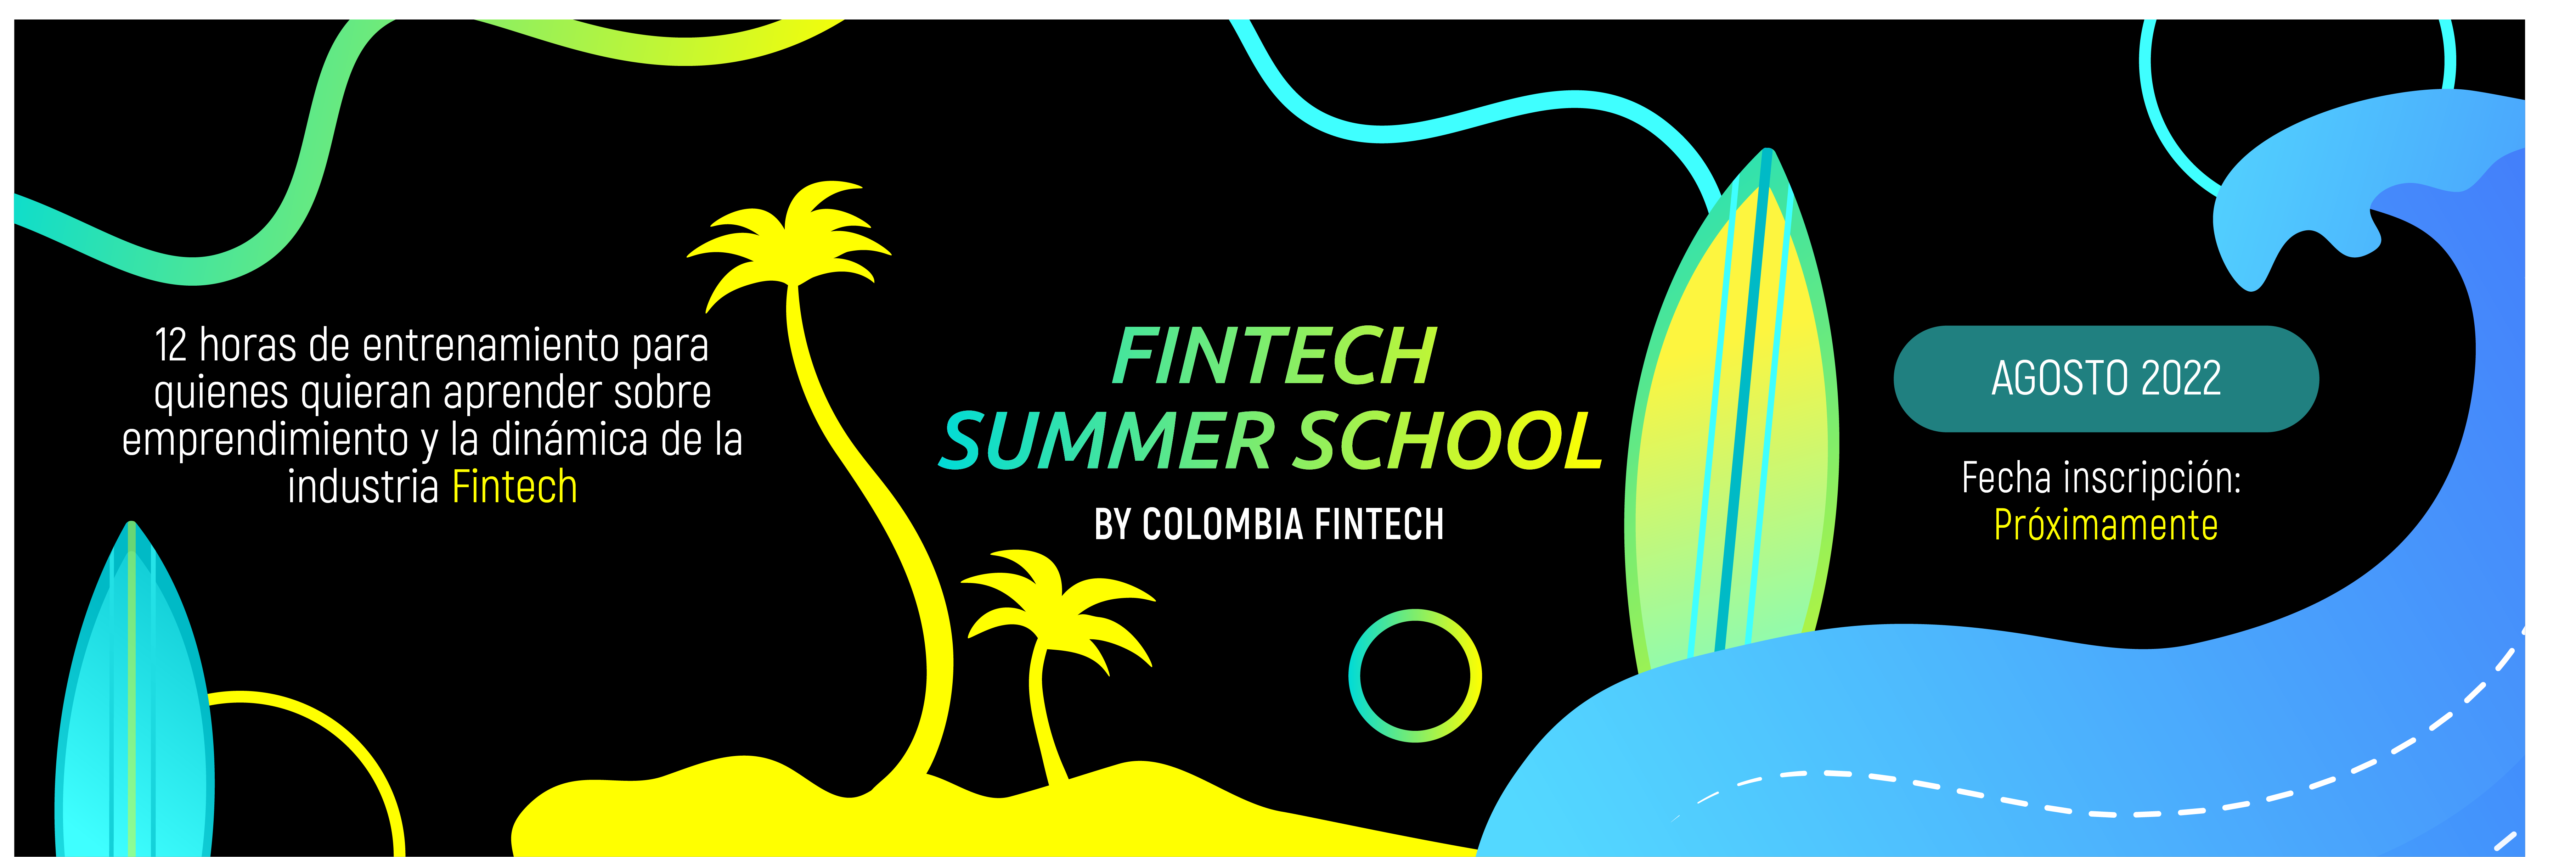 Se acerca agosto ¡Llega el Fintech Summer School!